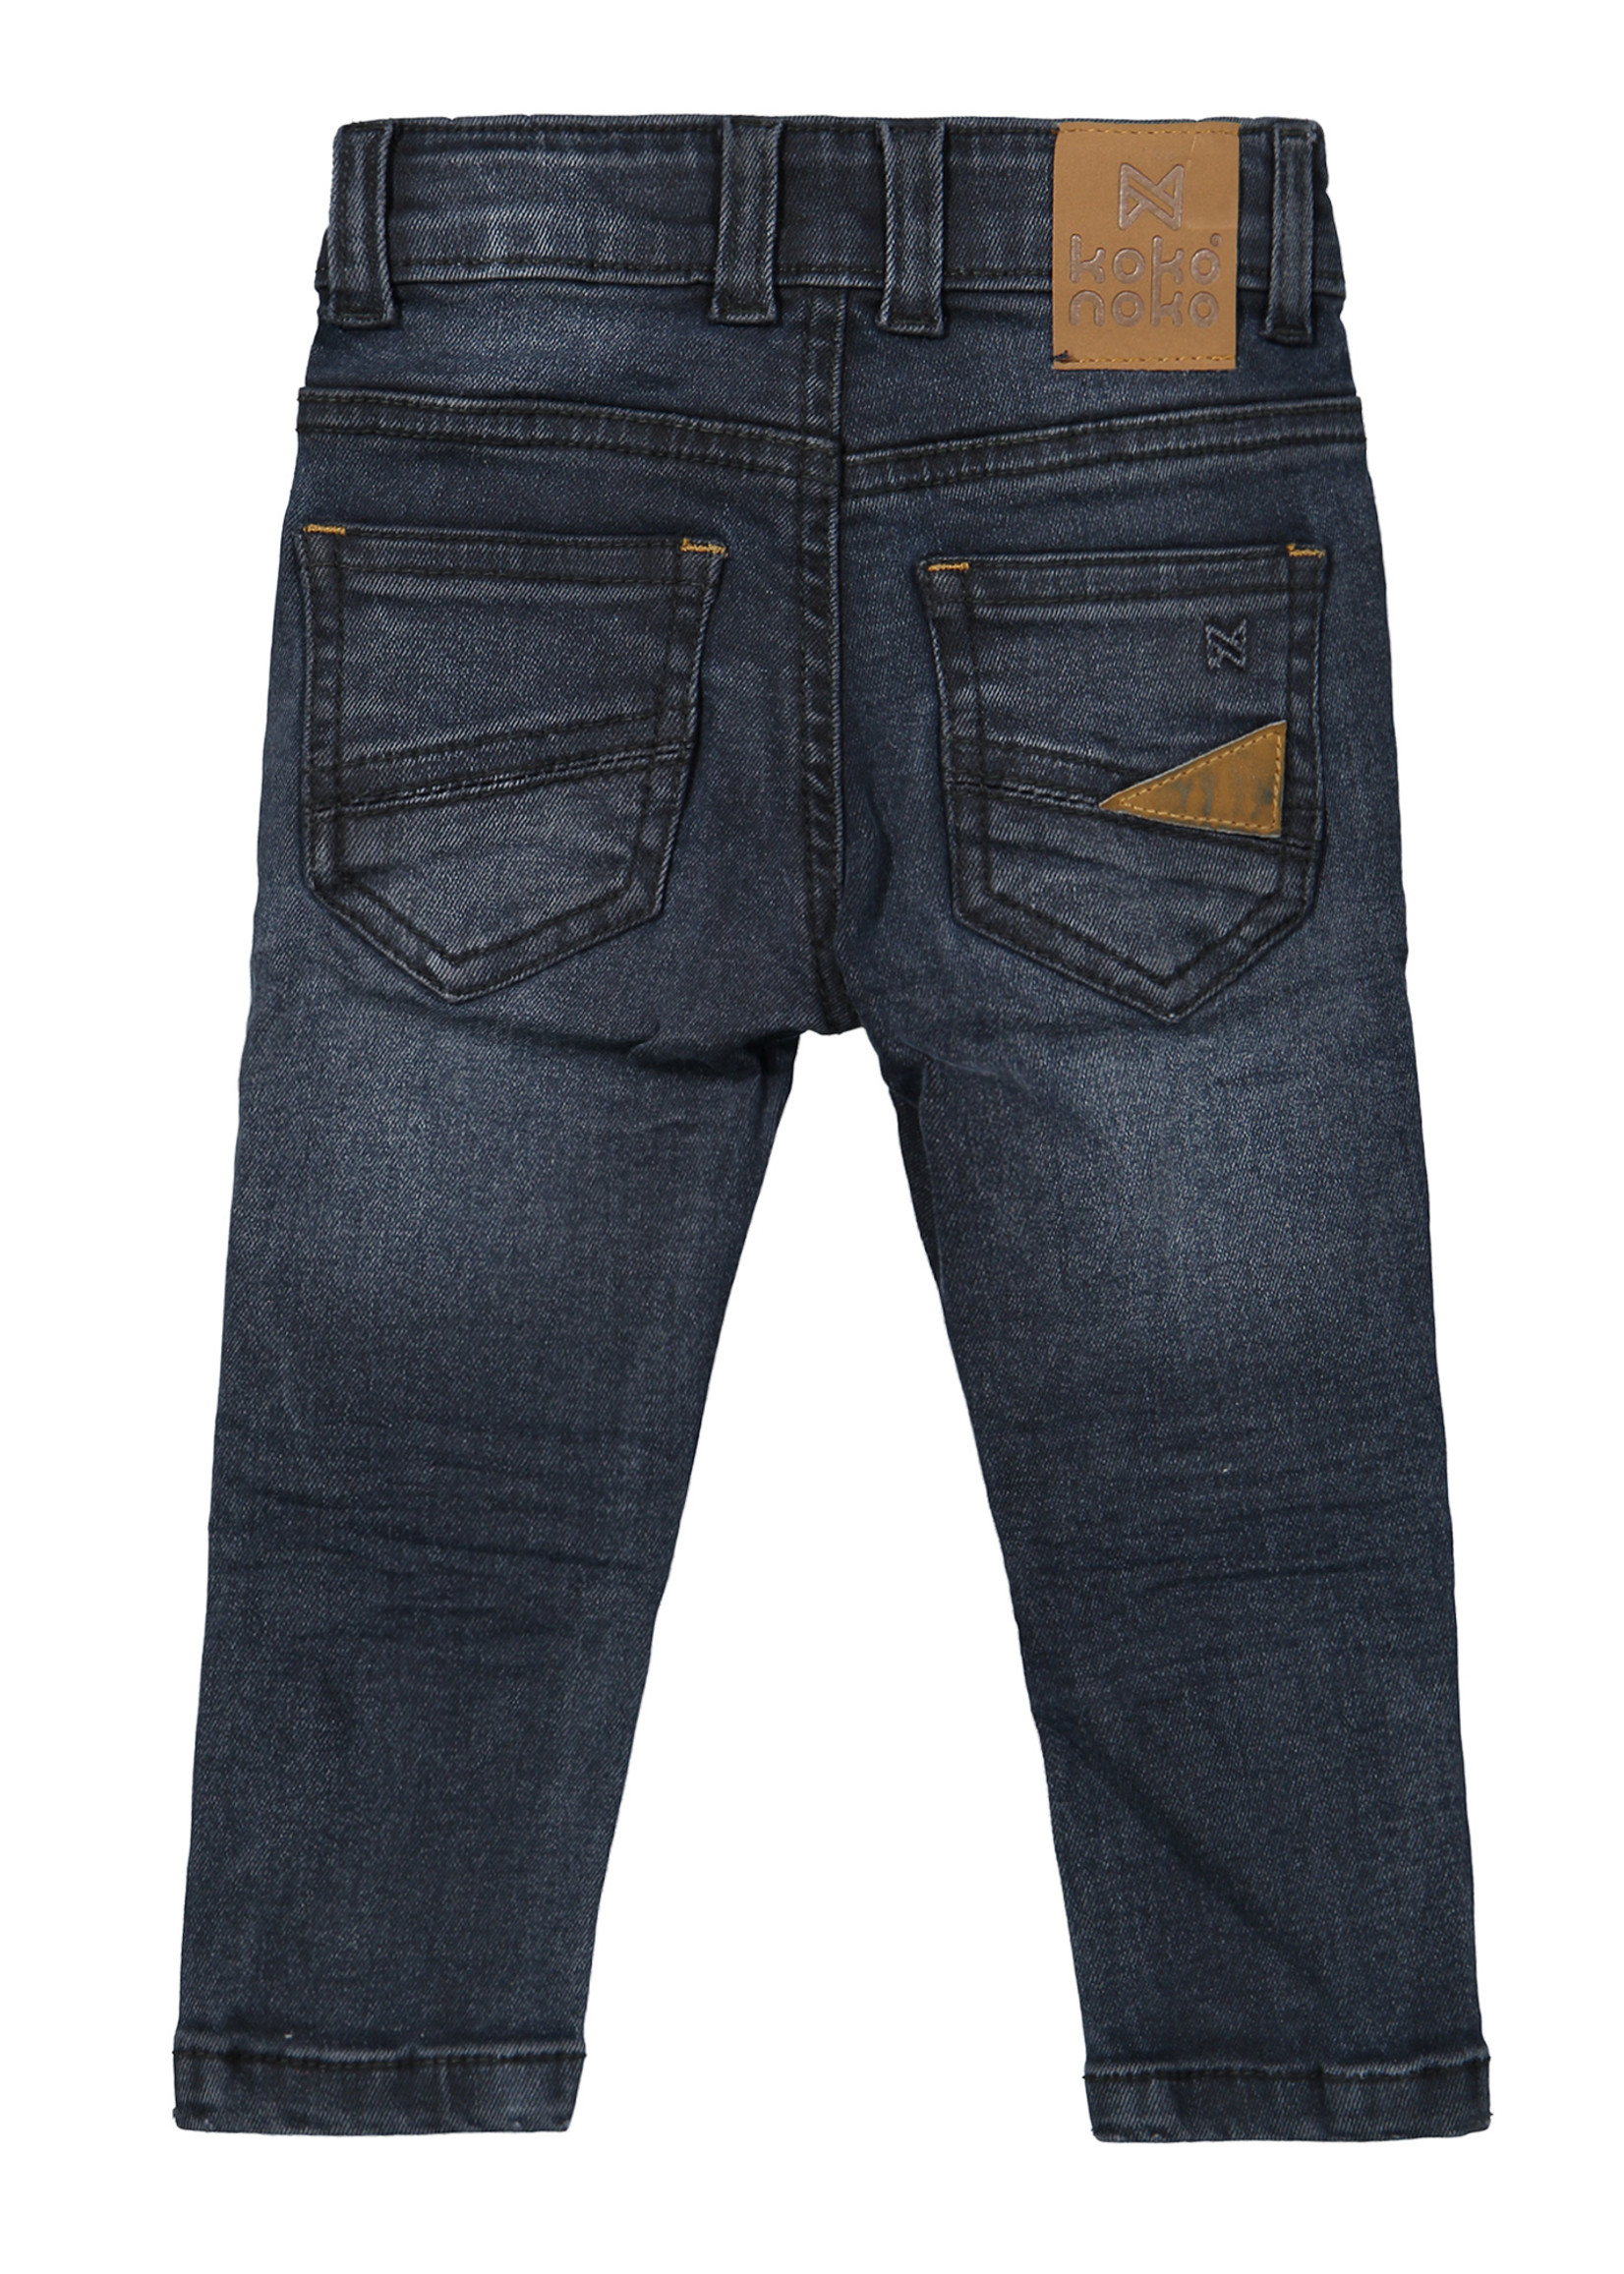 Koko Noko Boys Jeans, Blue jeans, F40809-37